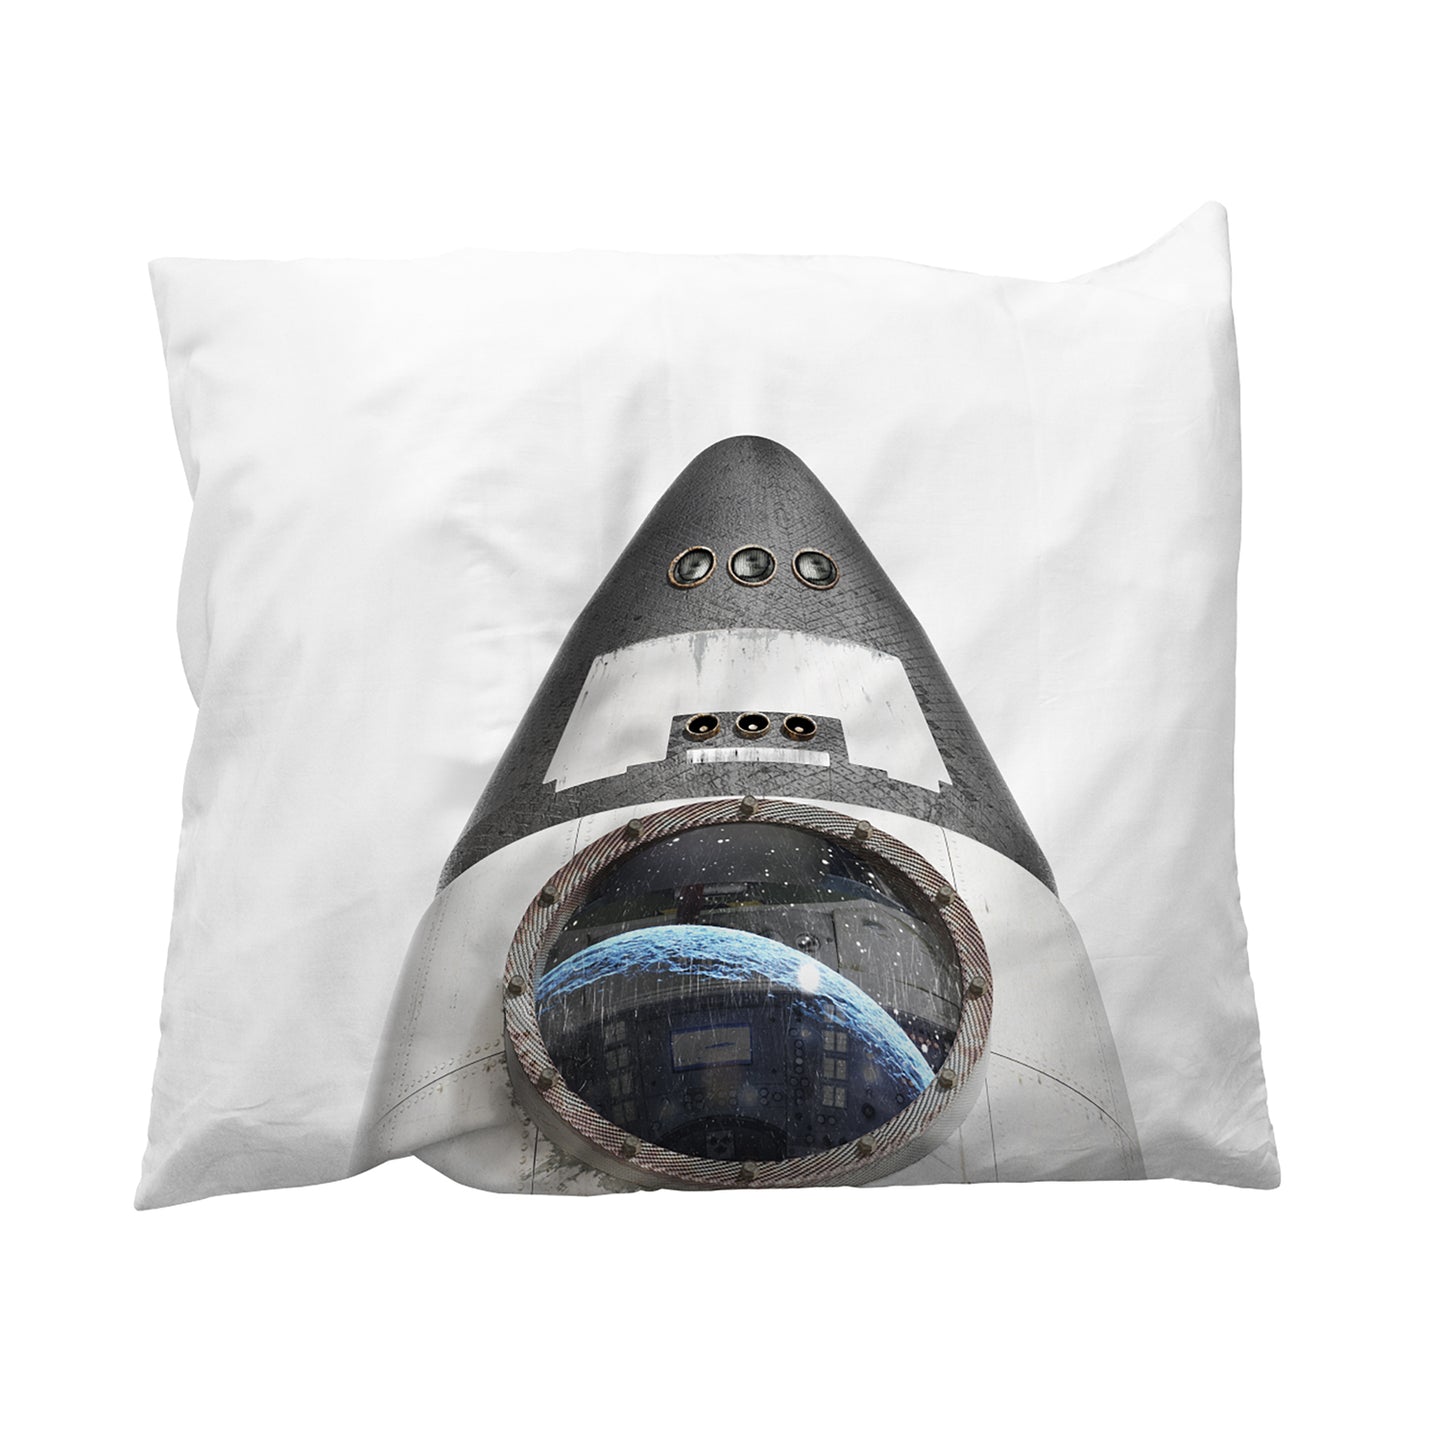 Rocket pillowcase